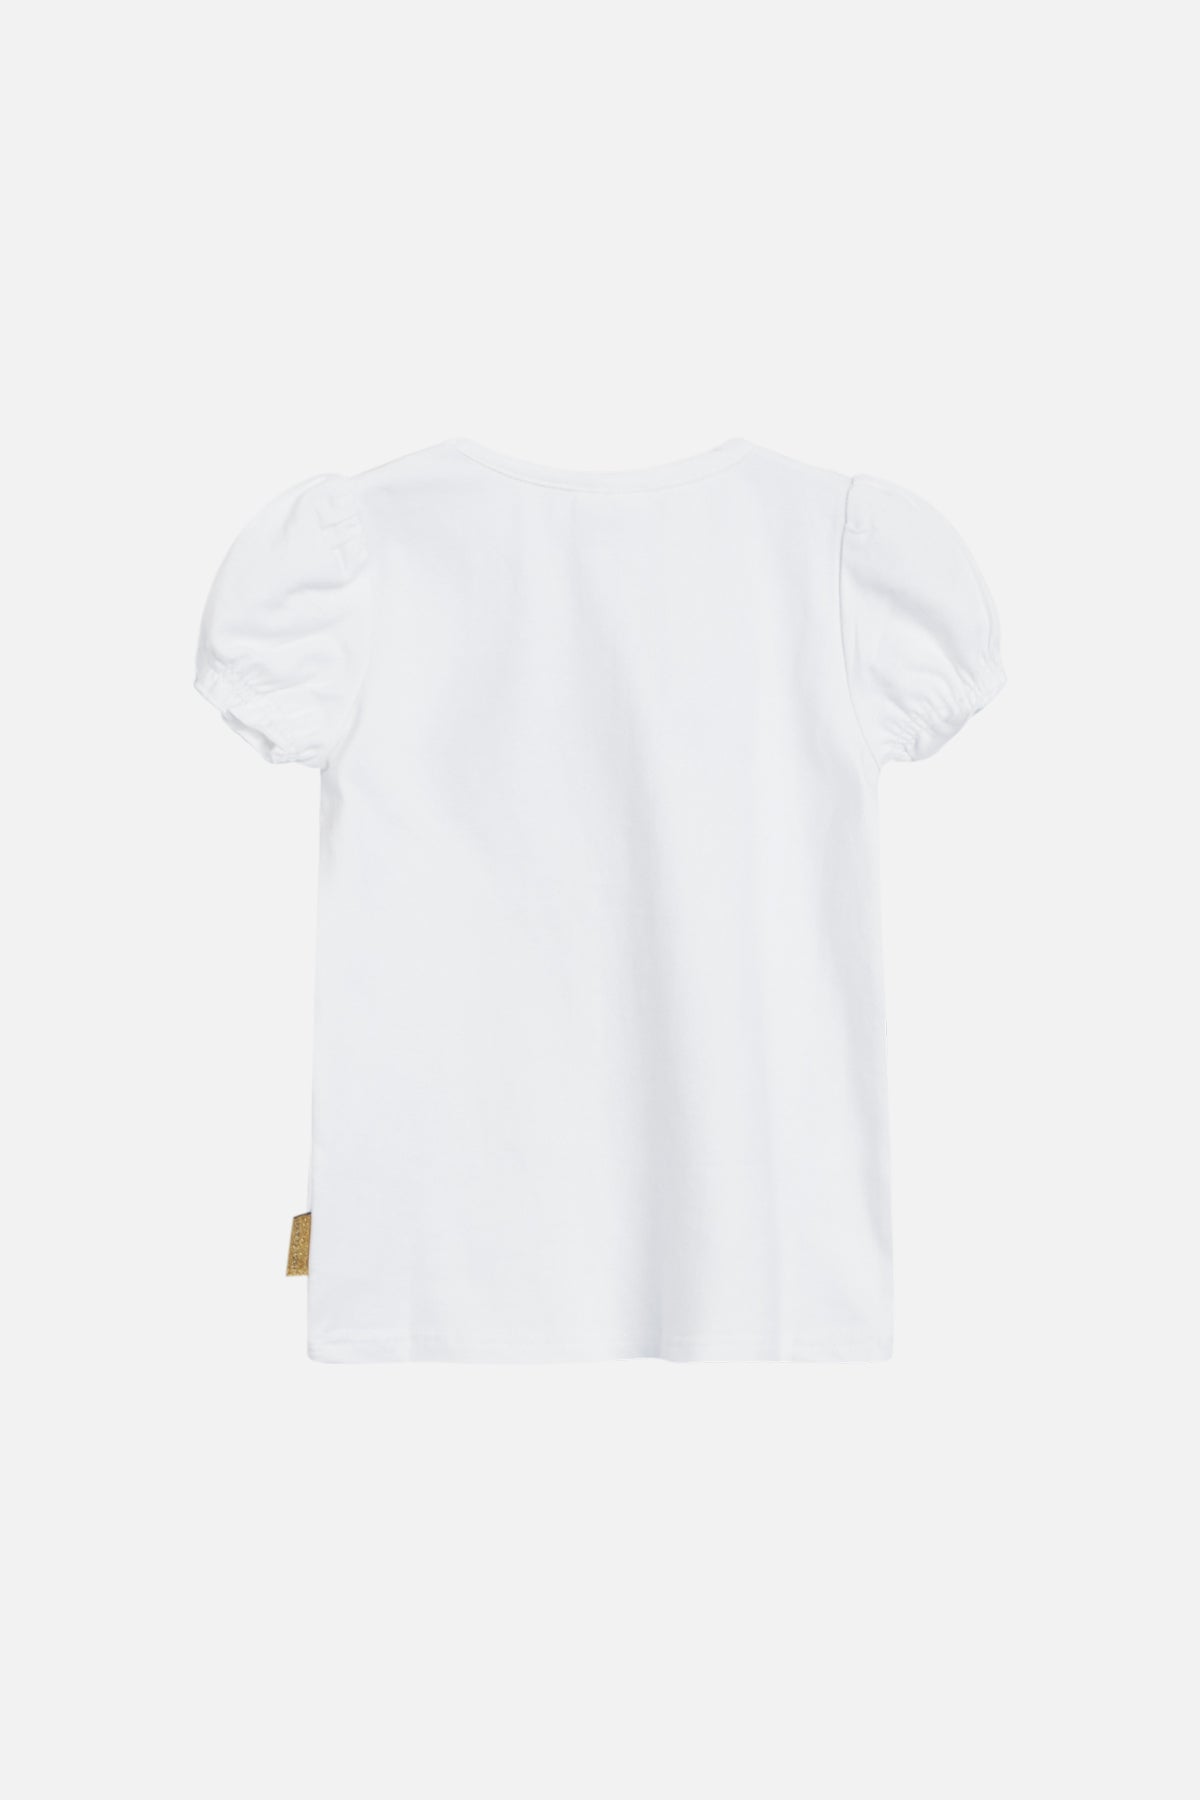 Ayla T-shirt White